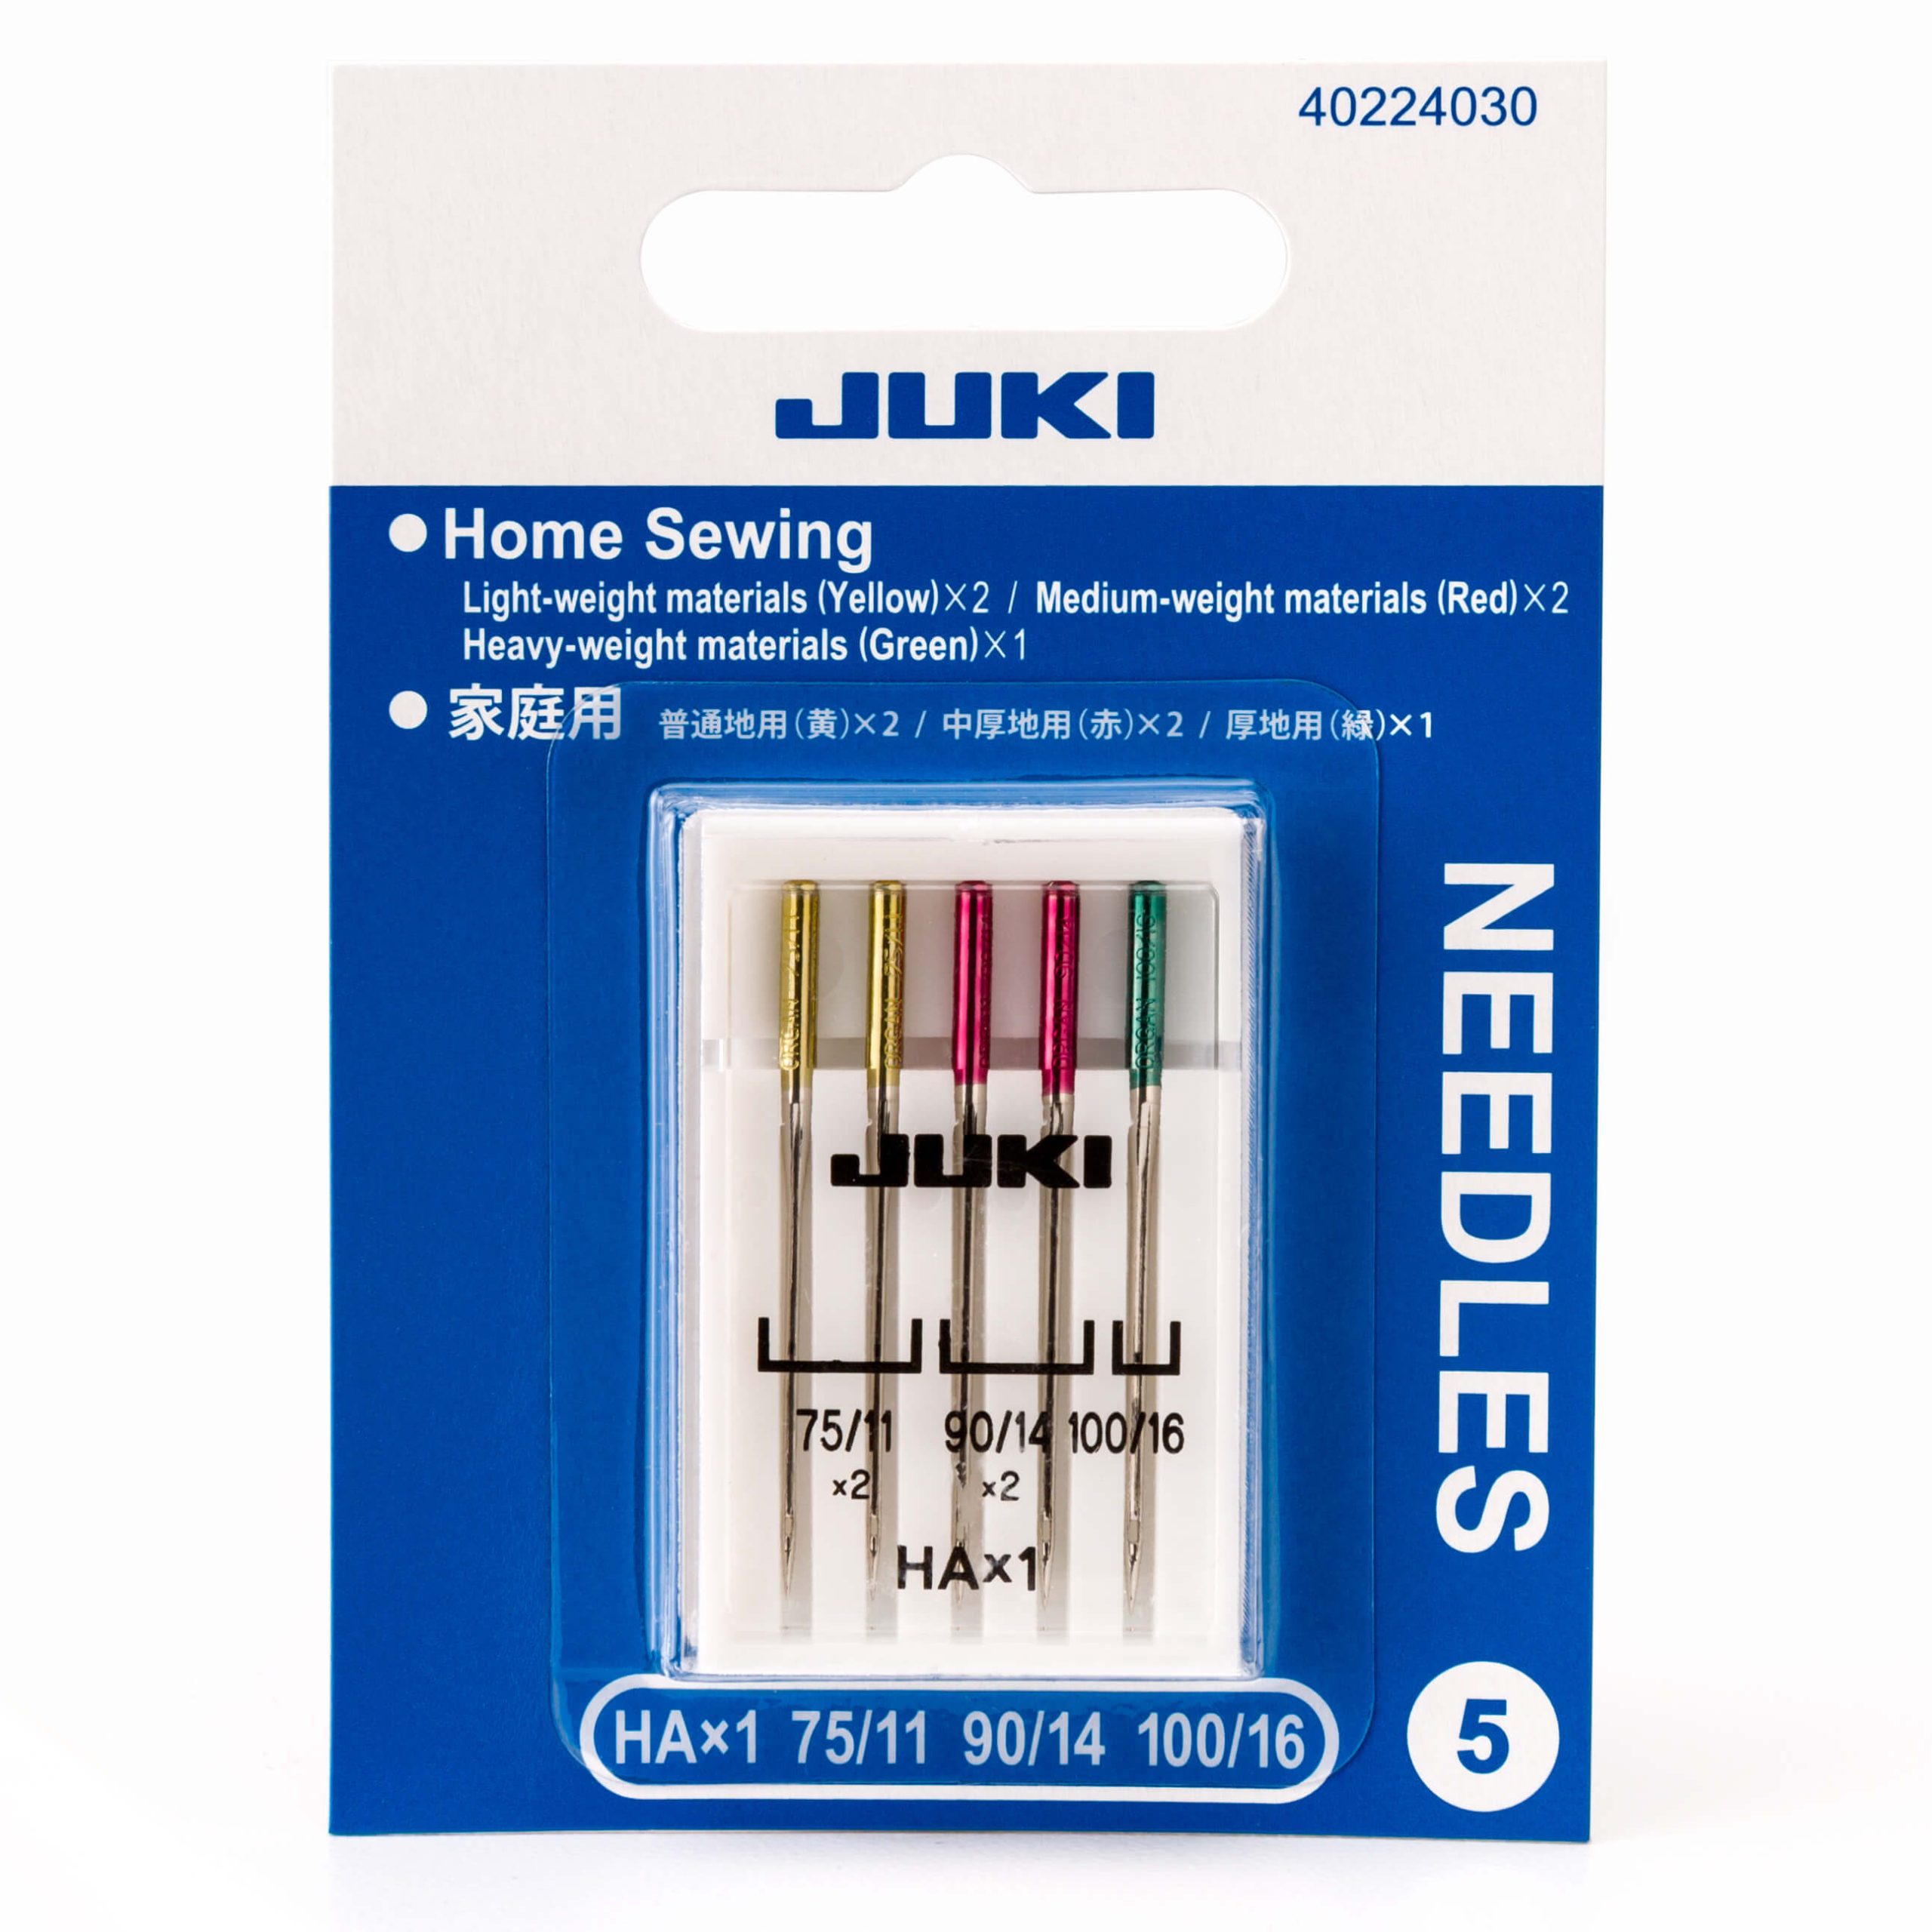 Home Sewing Assorted Needles - Juki Junkies